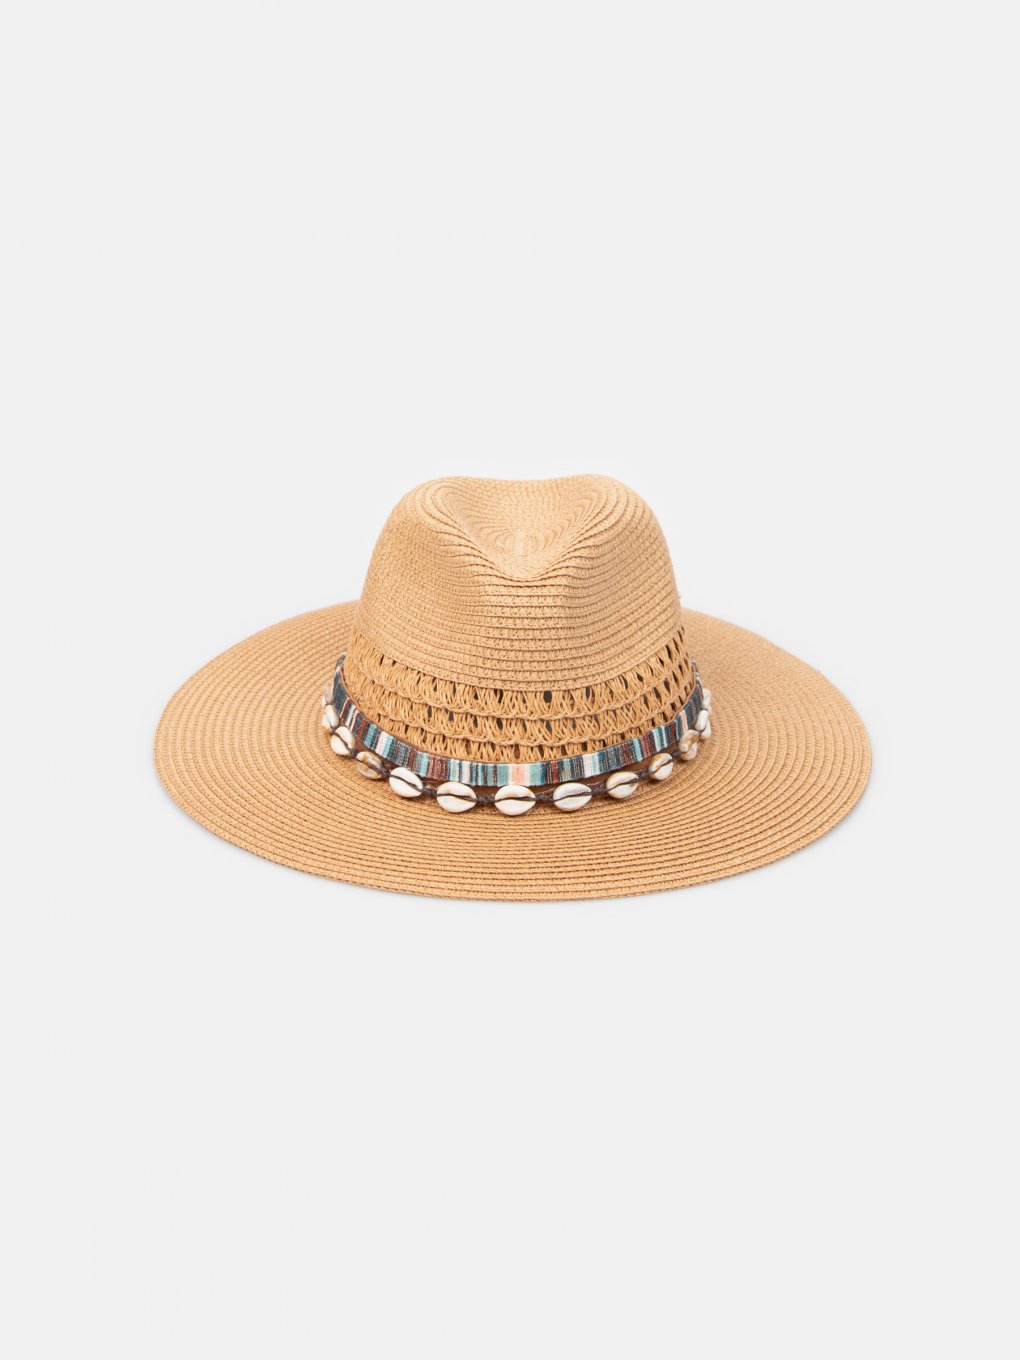 Panama summer hat with shells